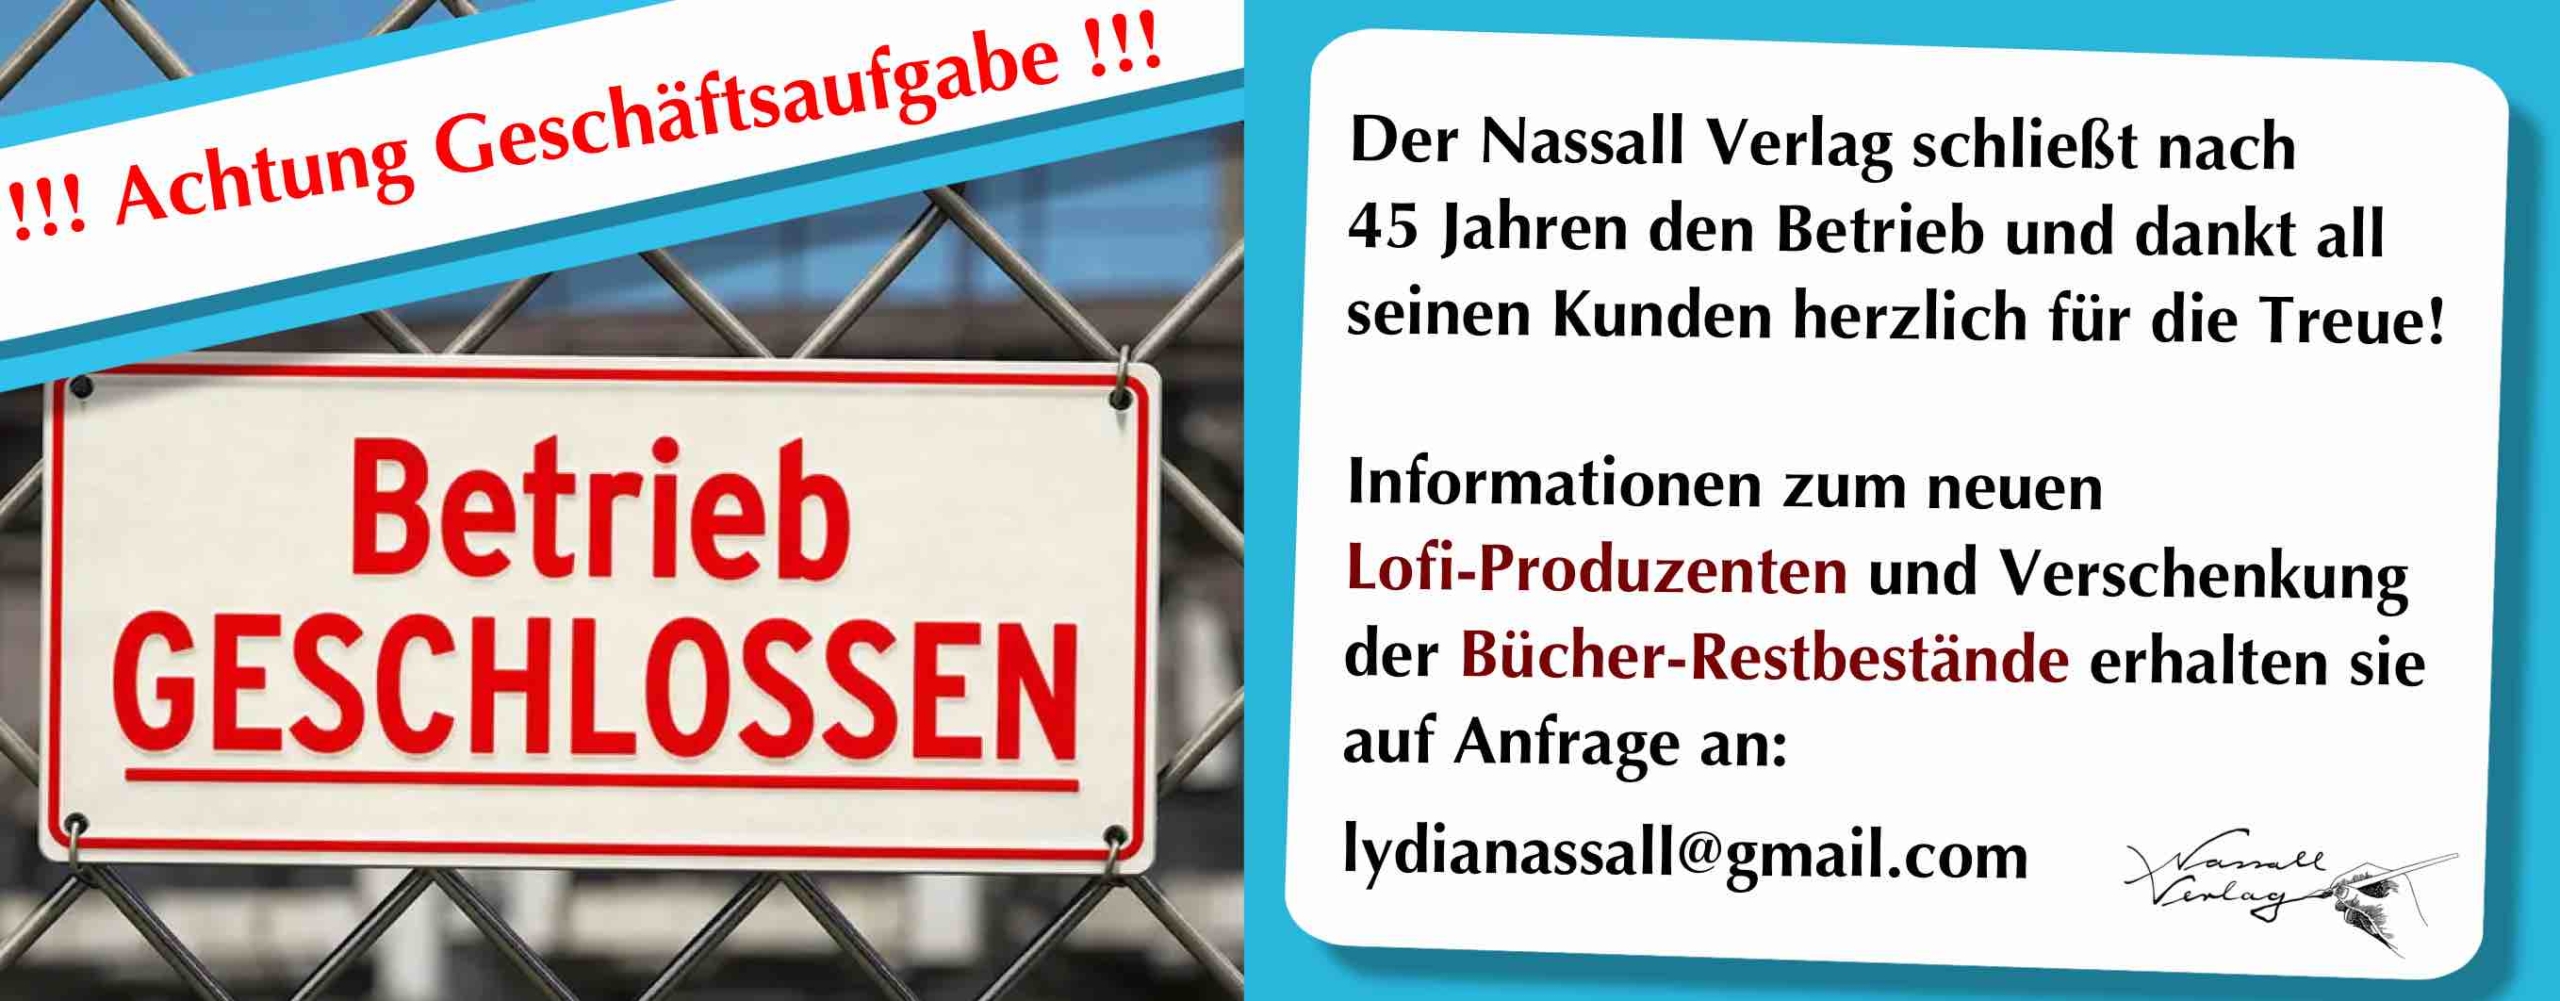 (c) Nassall-verlag.de